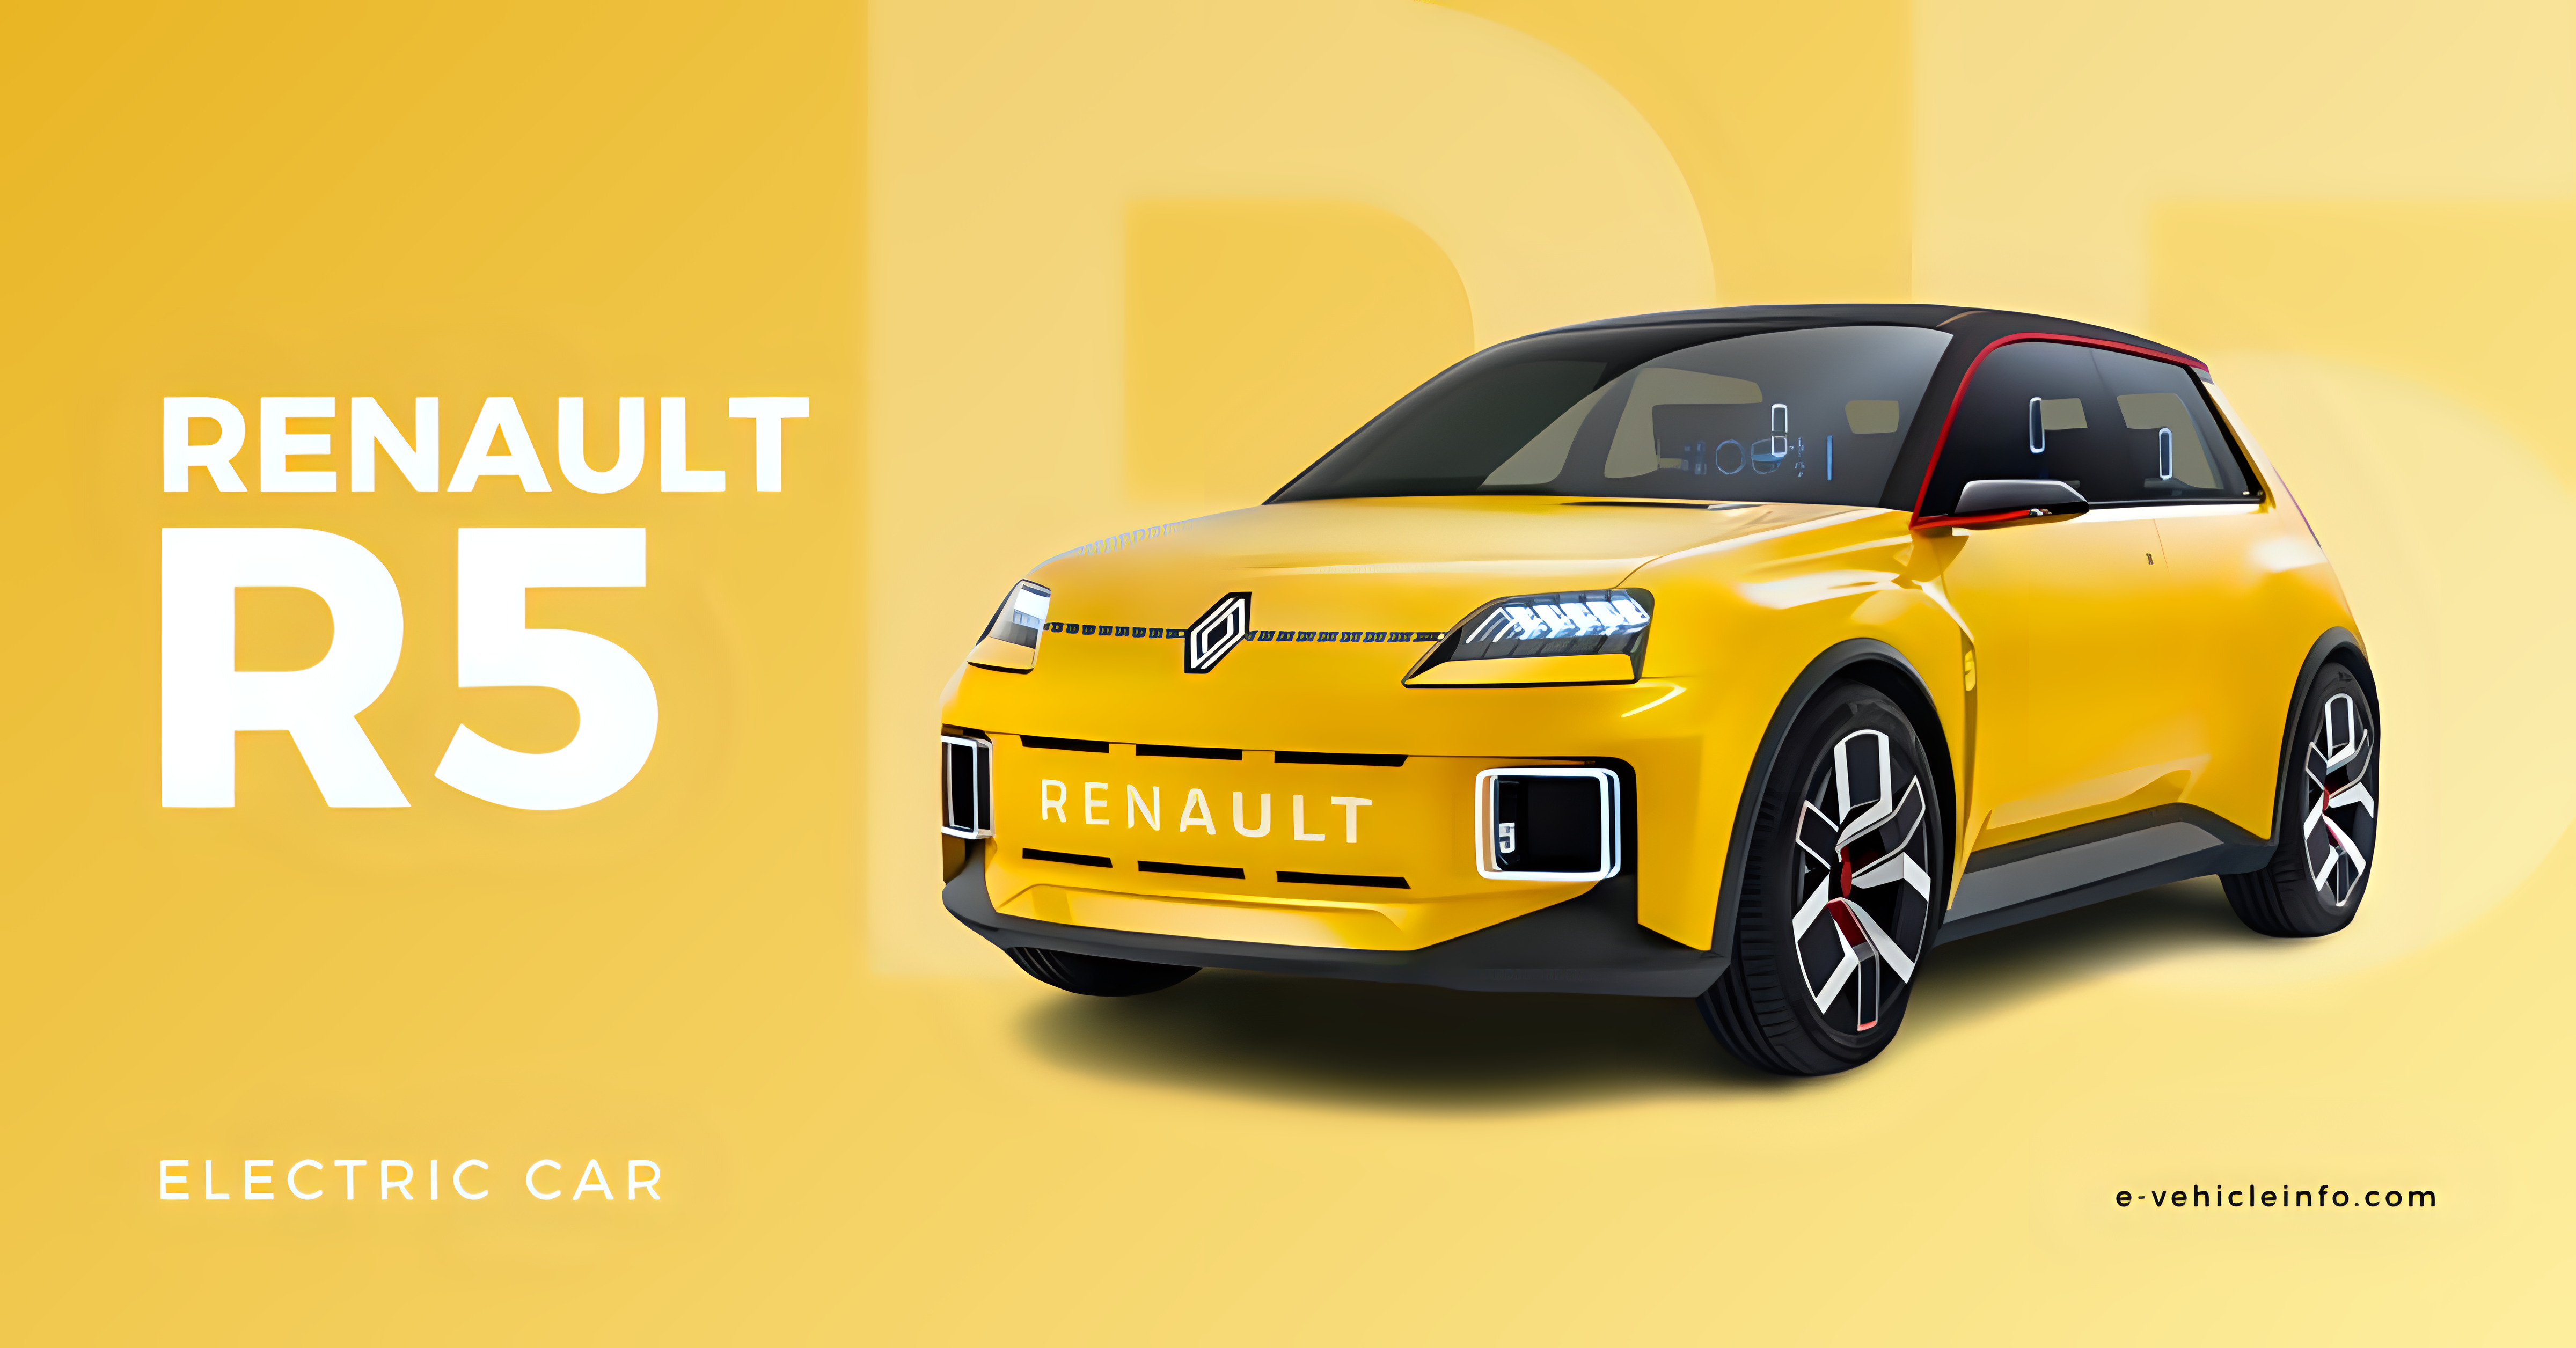 Renault unveils R5 electric model at Geneva Motor Show - E-Vehicleinfo